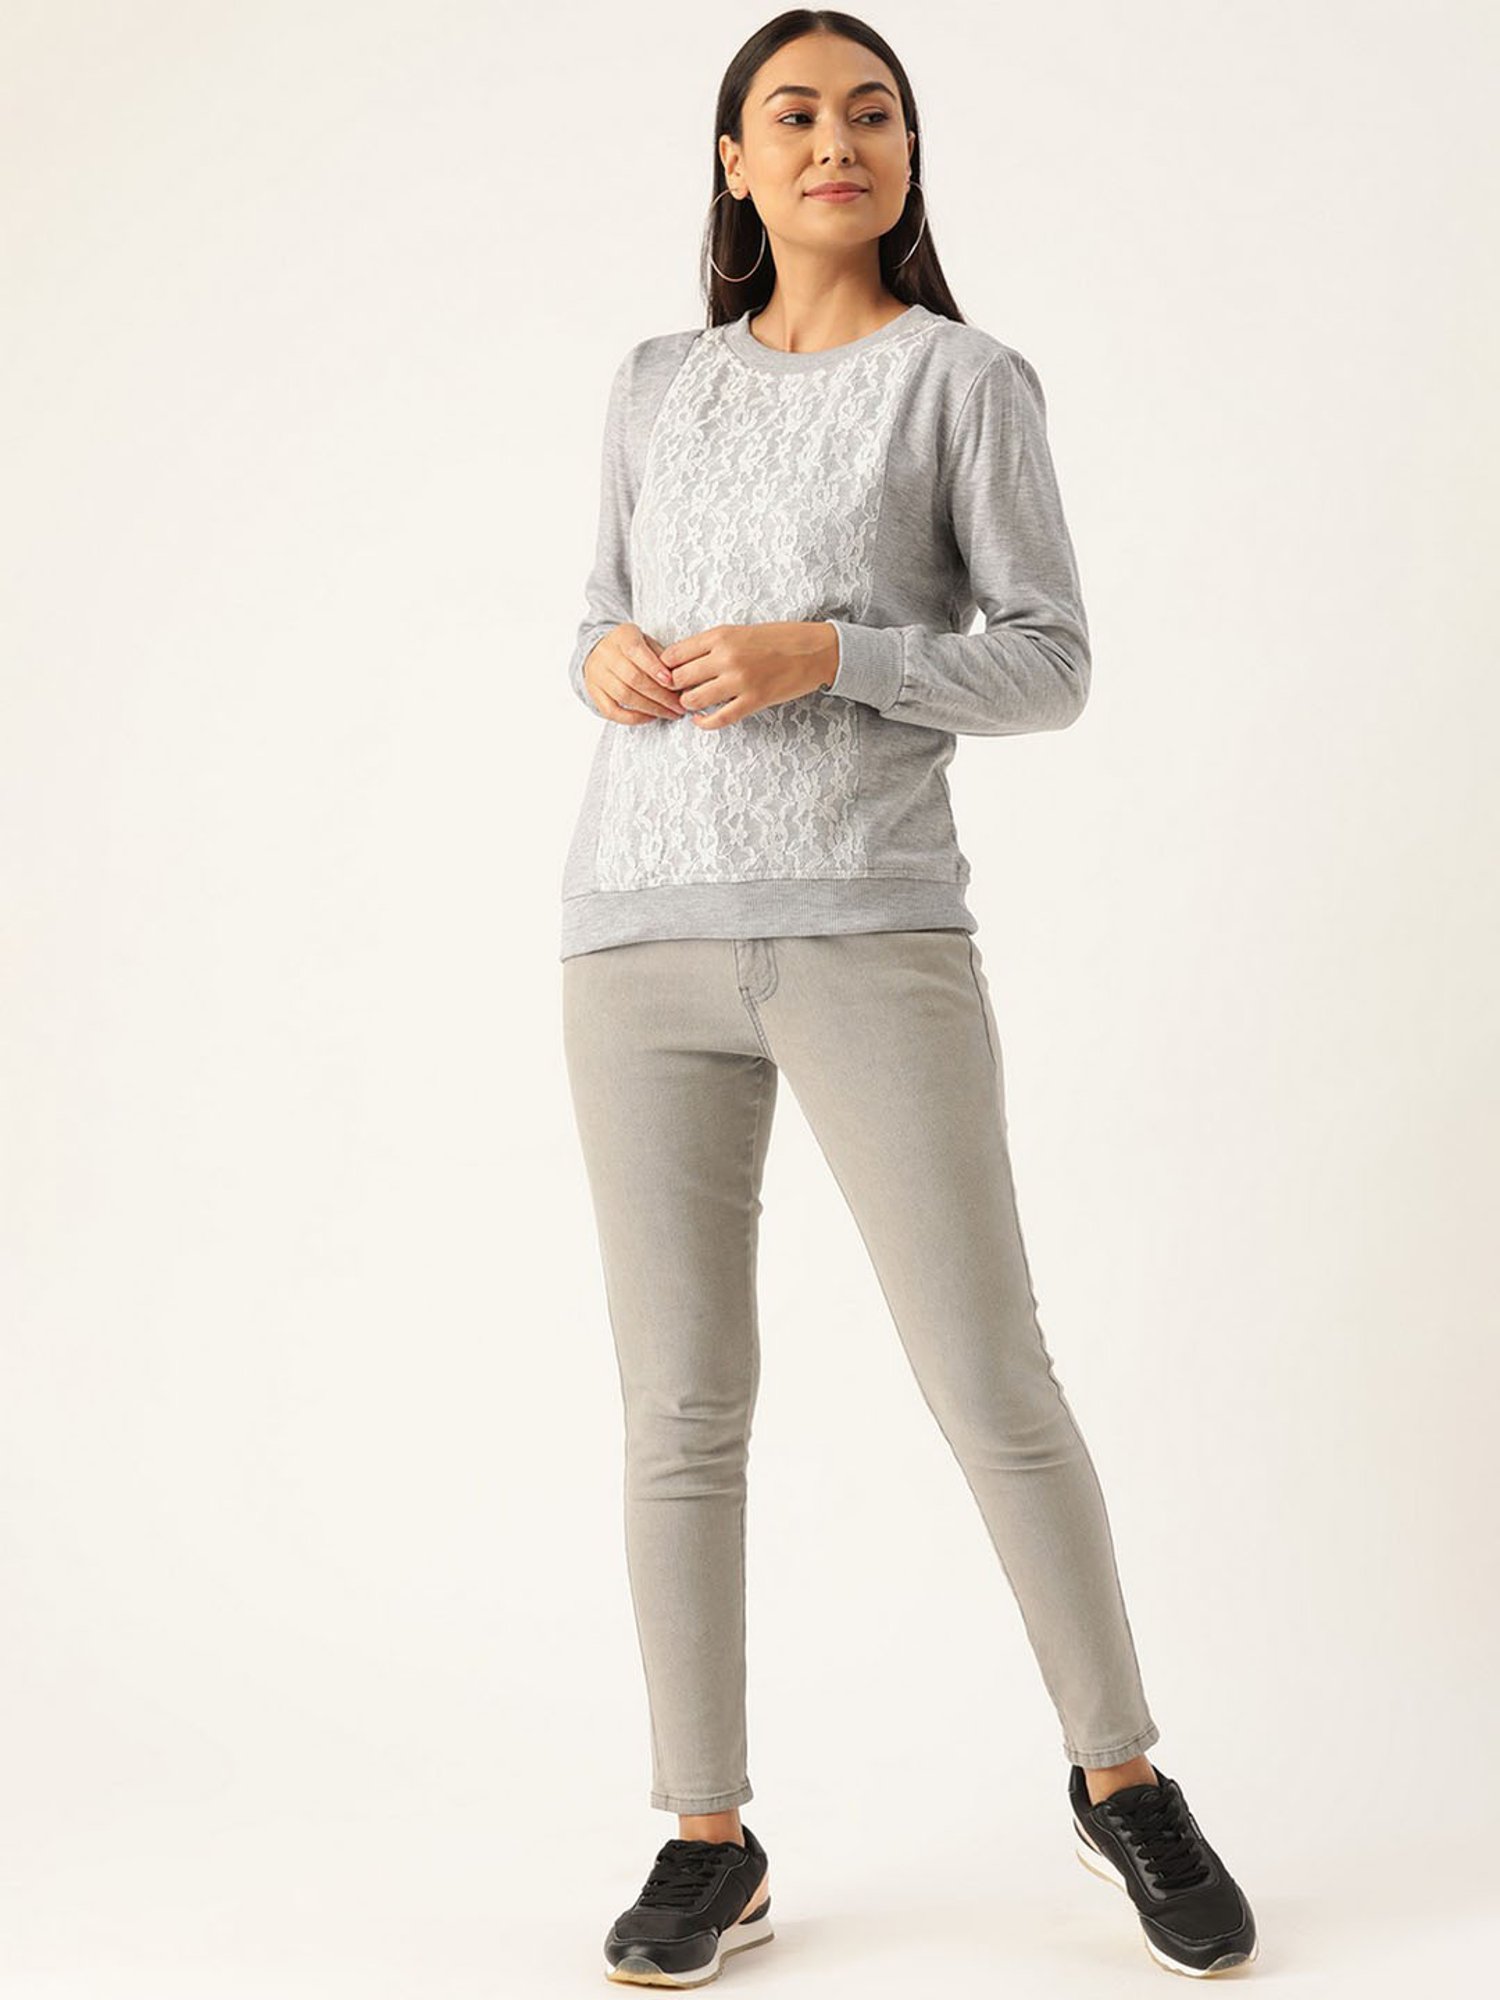 Buy Belle Fille Grey Lace Sweatshirt for Women Online @ Tata CLiQ